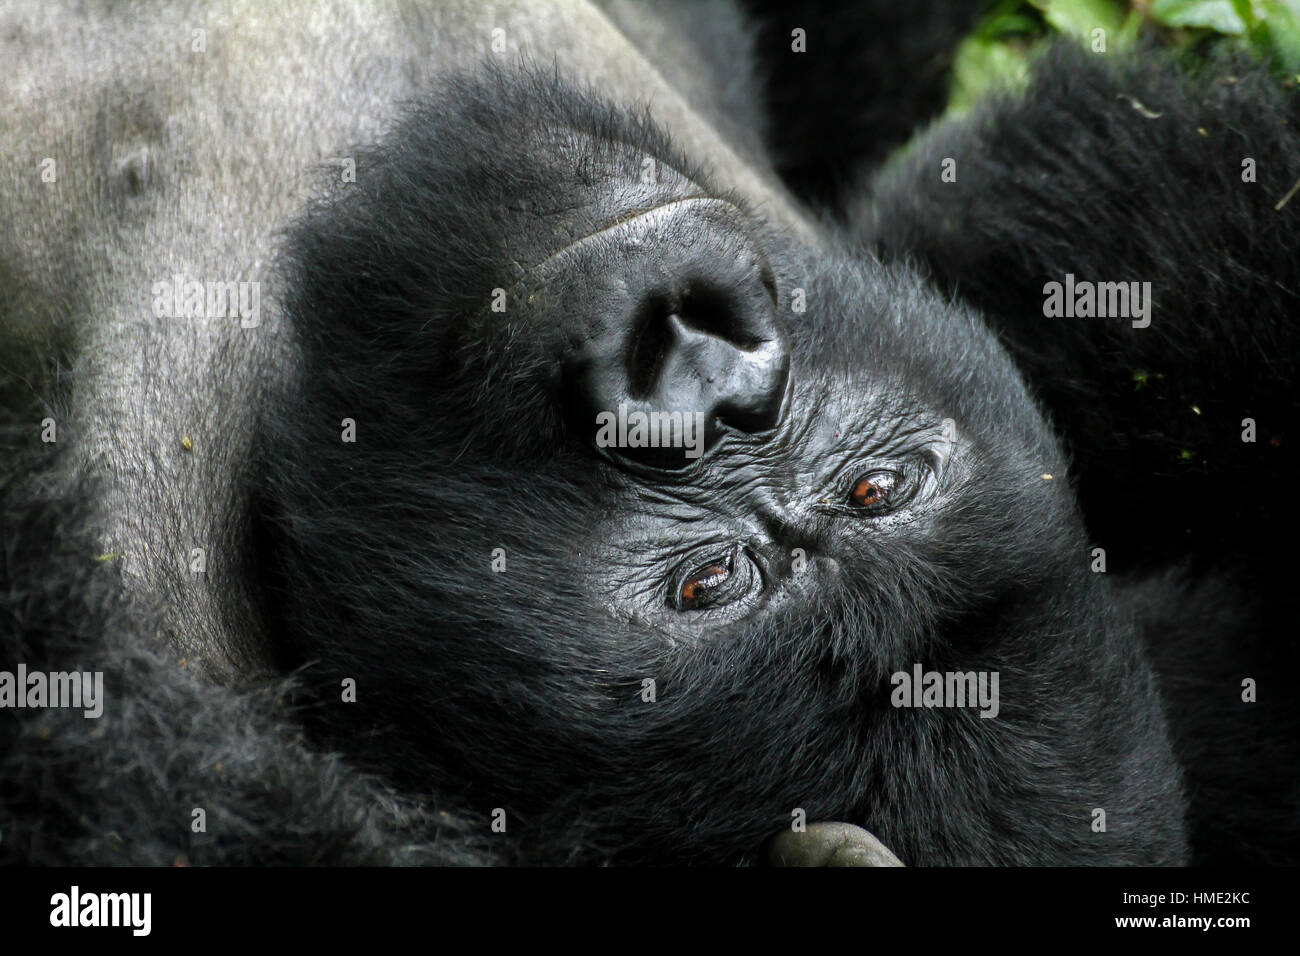 mountain gorilla portrait in the jungles of virunga national park, democratic republic of congo Stock Photo